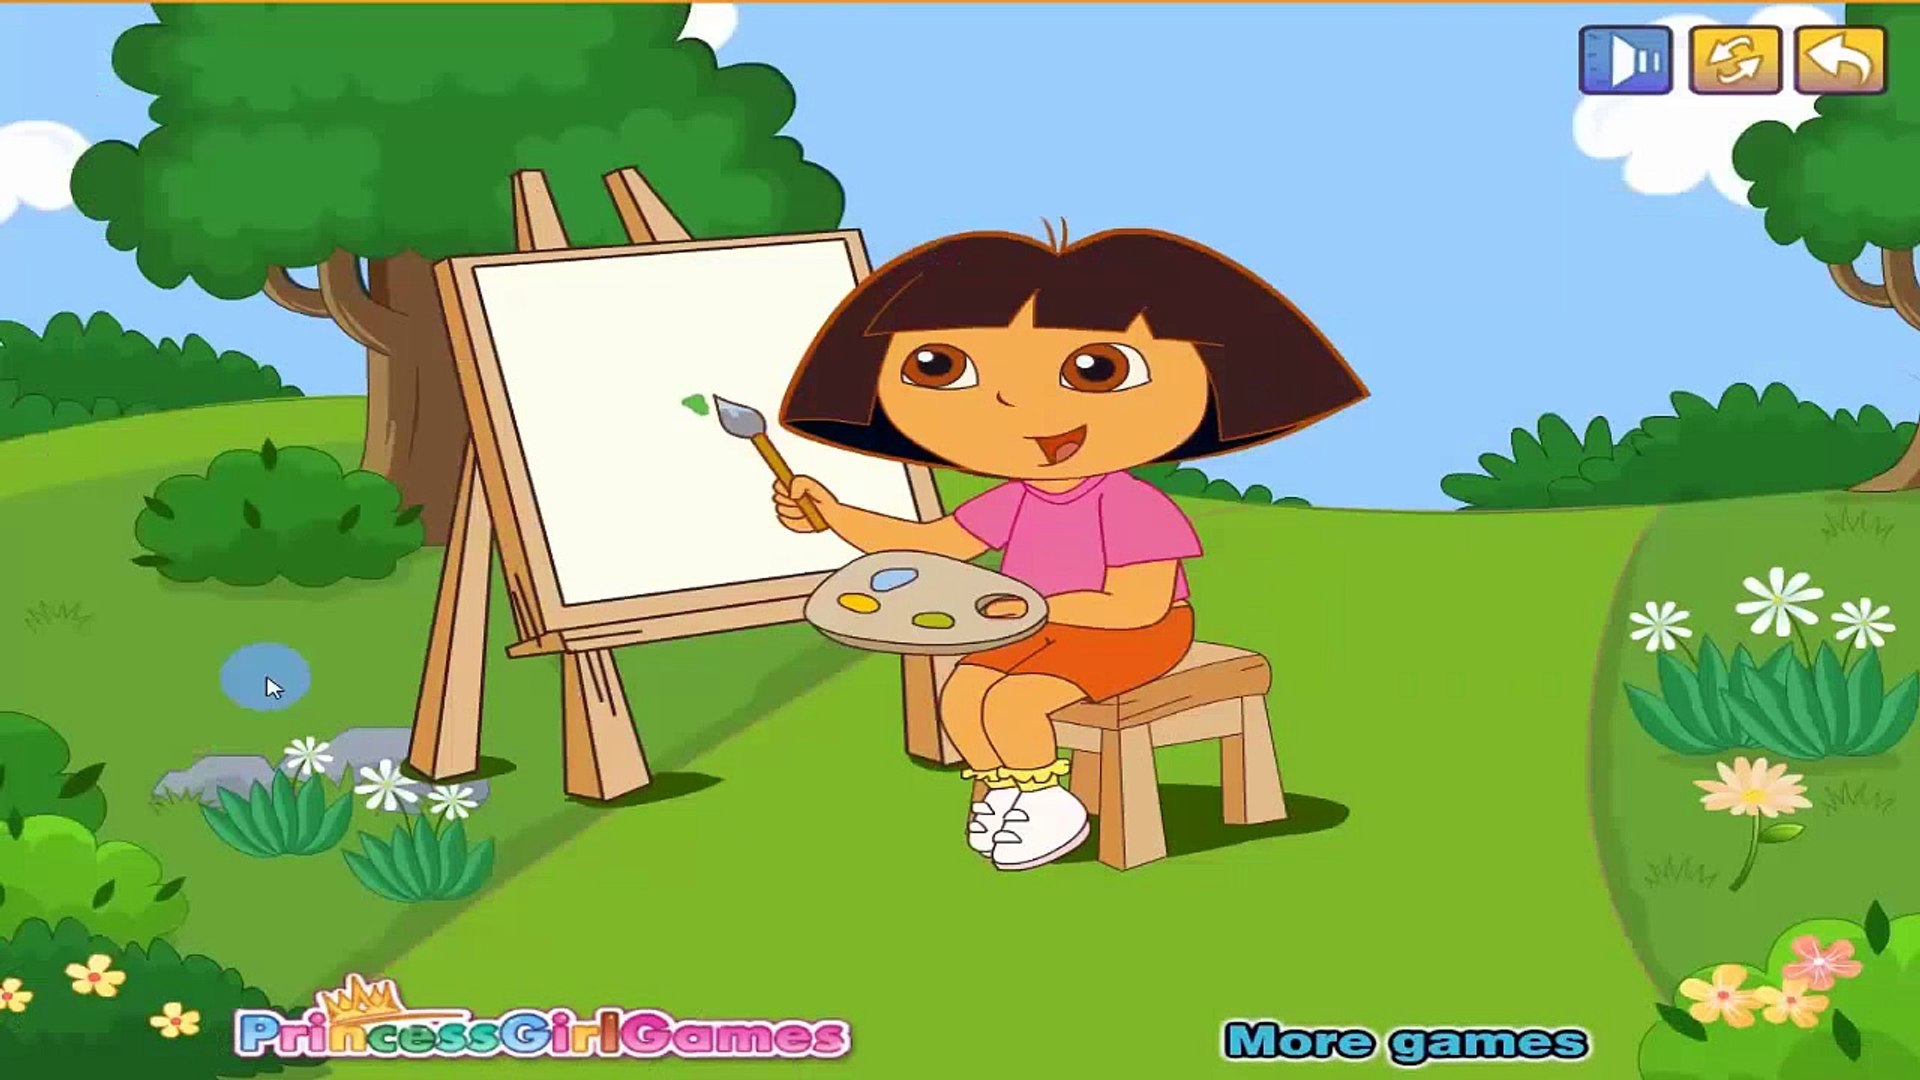 Play Free Online Games Dora - Dora's Cooking Club Game - Dora Games 